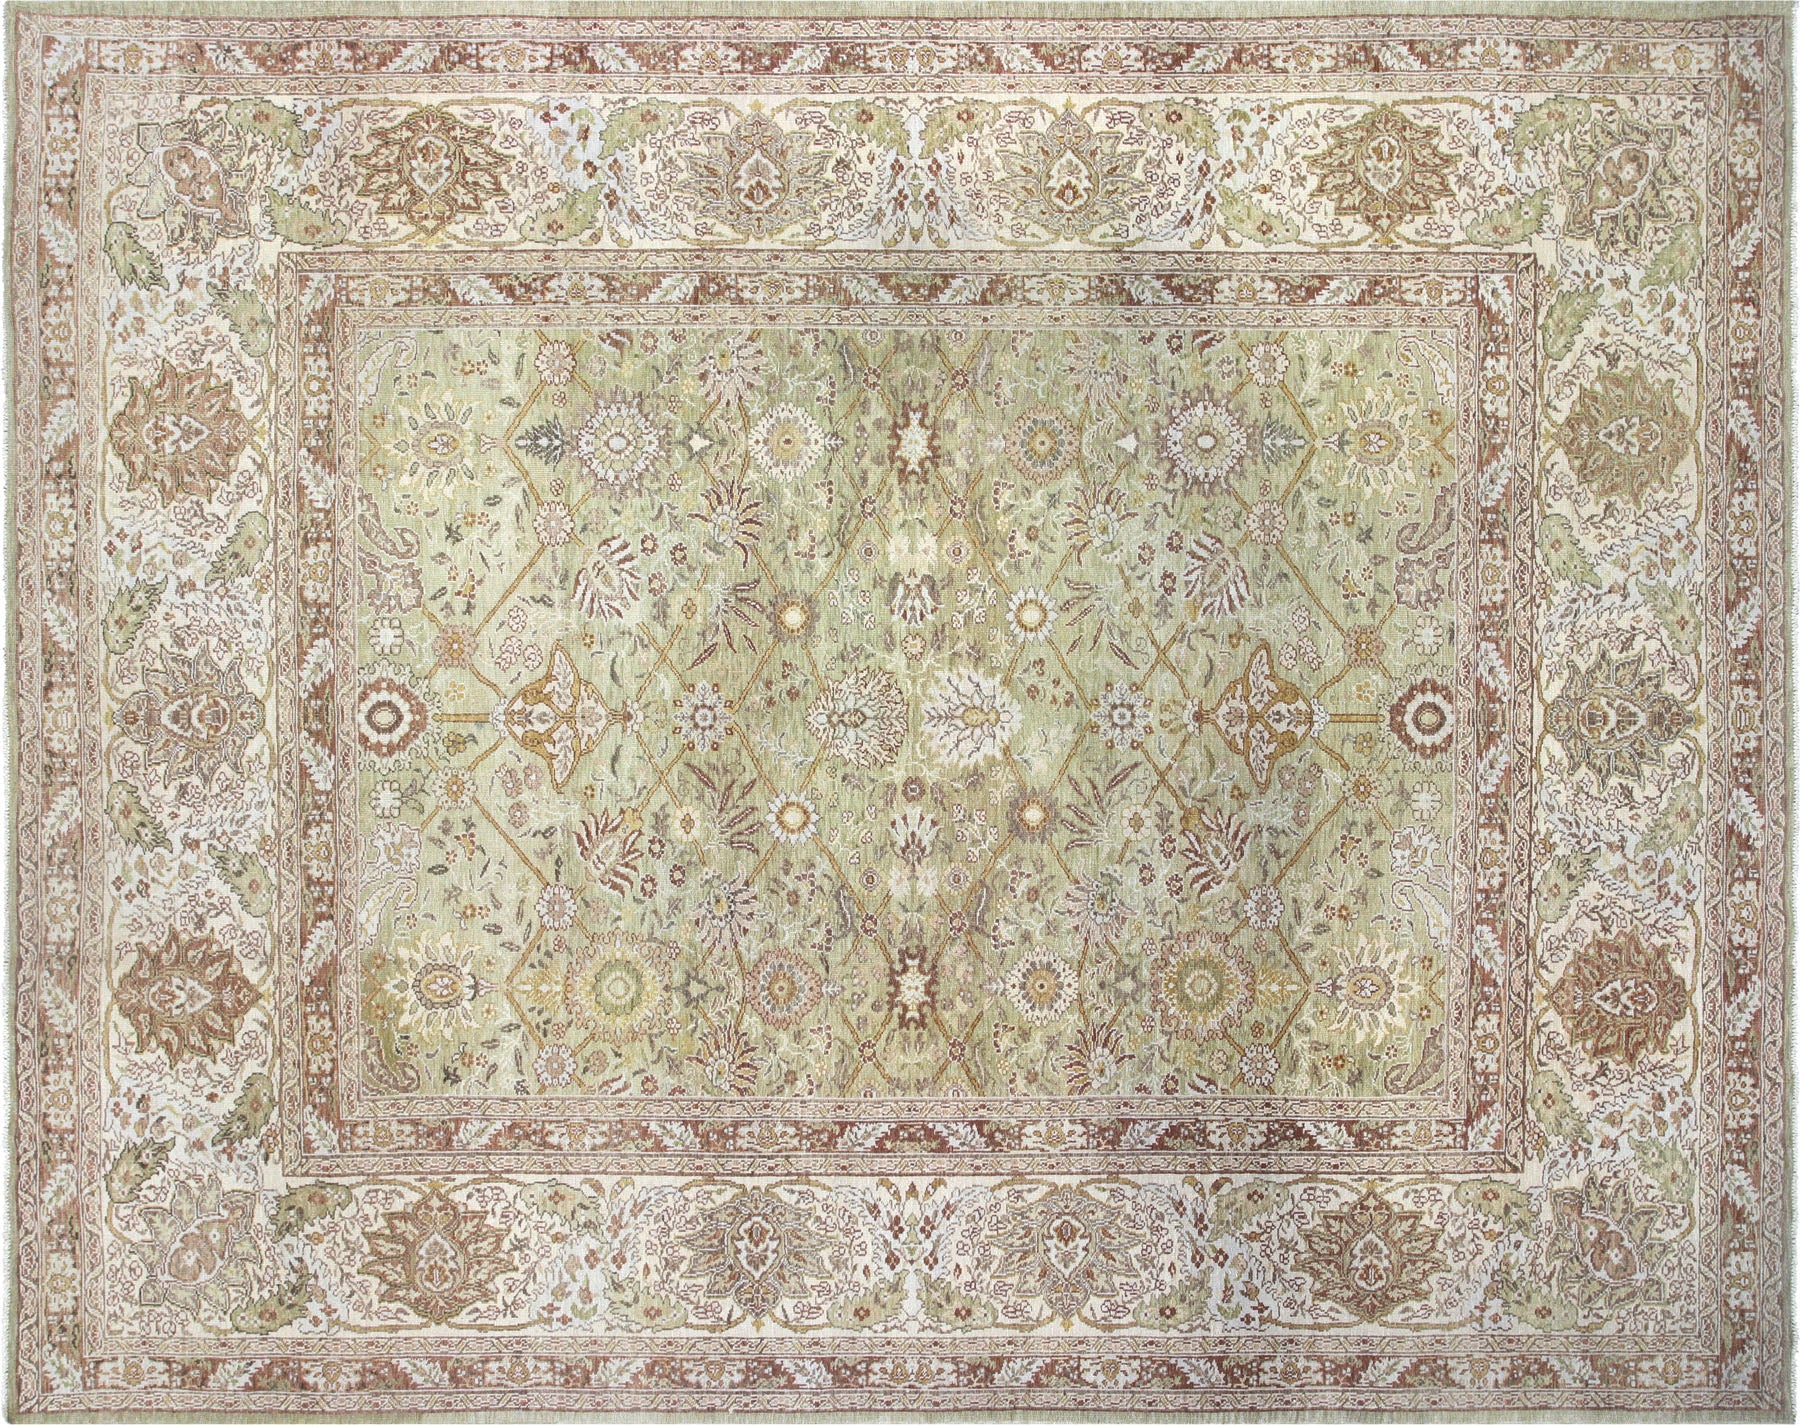 Recently Woven Turkish Oushak Carpet - 9'2" x 11'7"